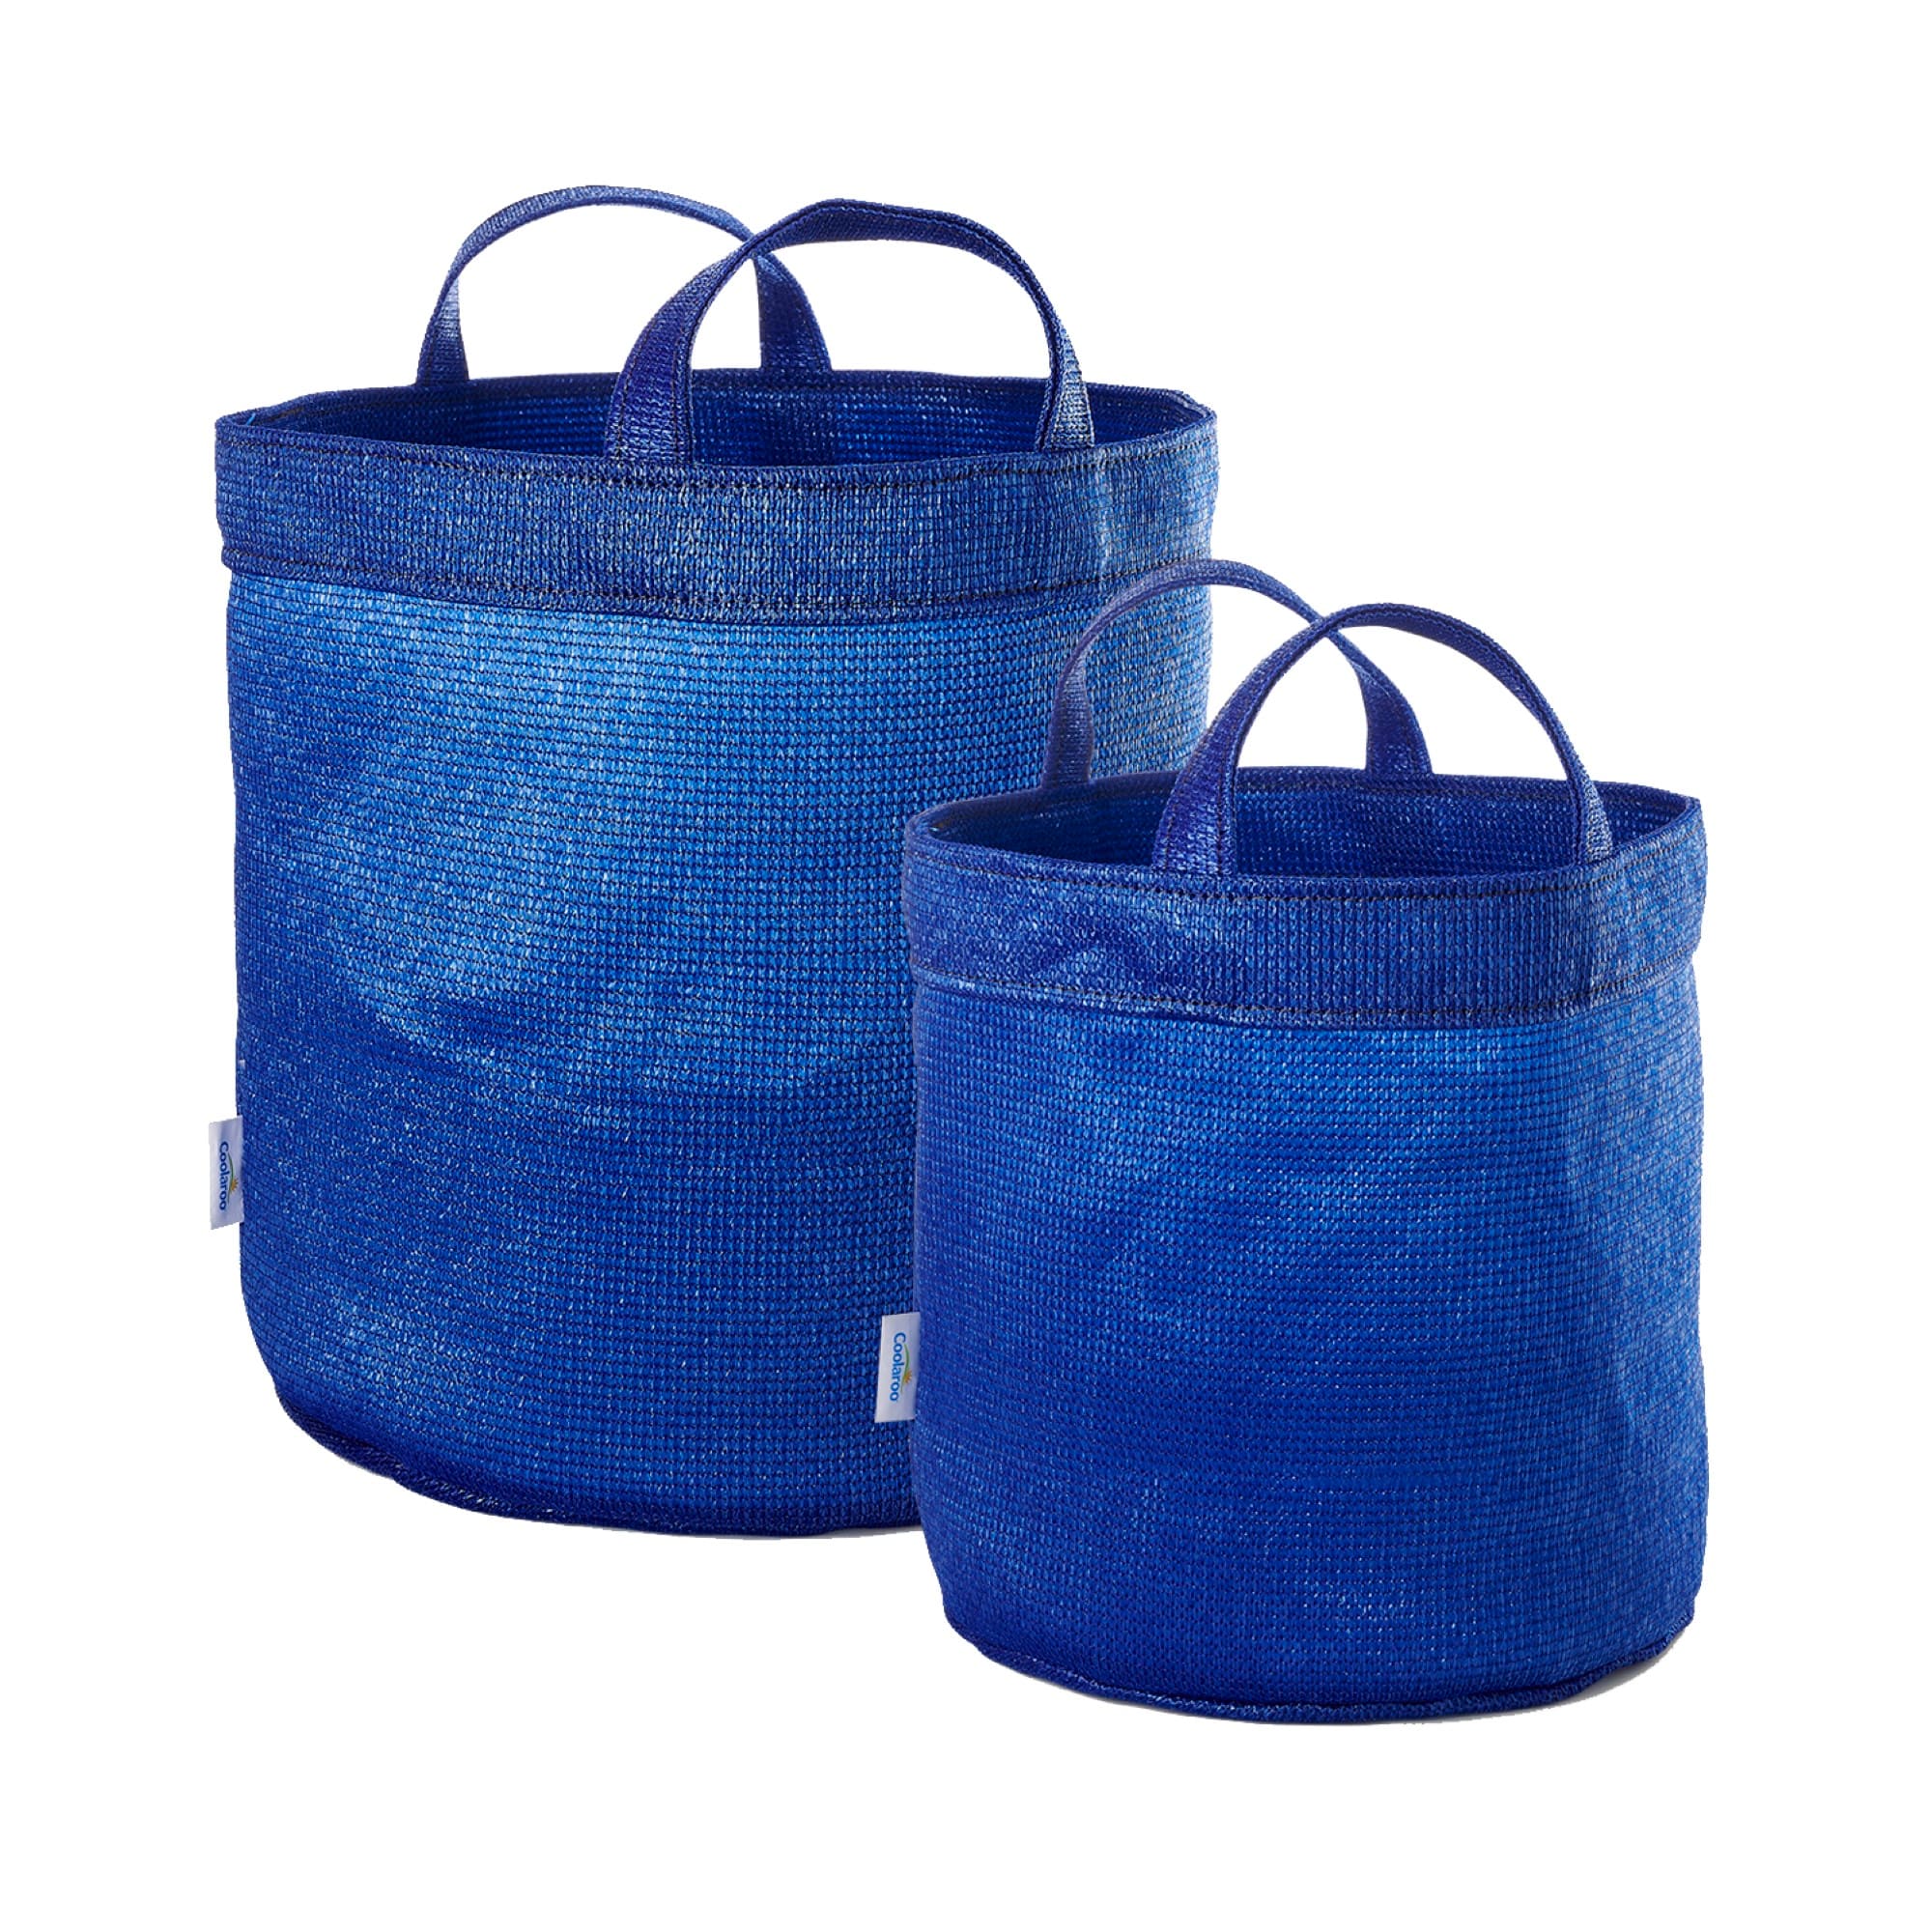 Coolaroo Aquatic Blue Pet Bags, Small/Medium, Pack of 2 | Petco